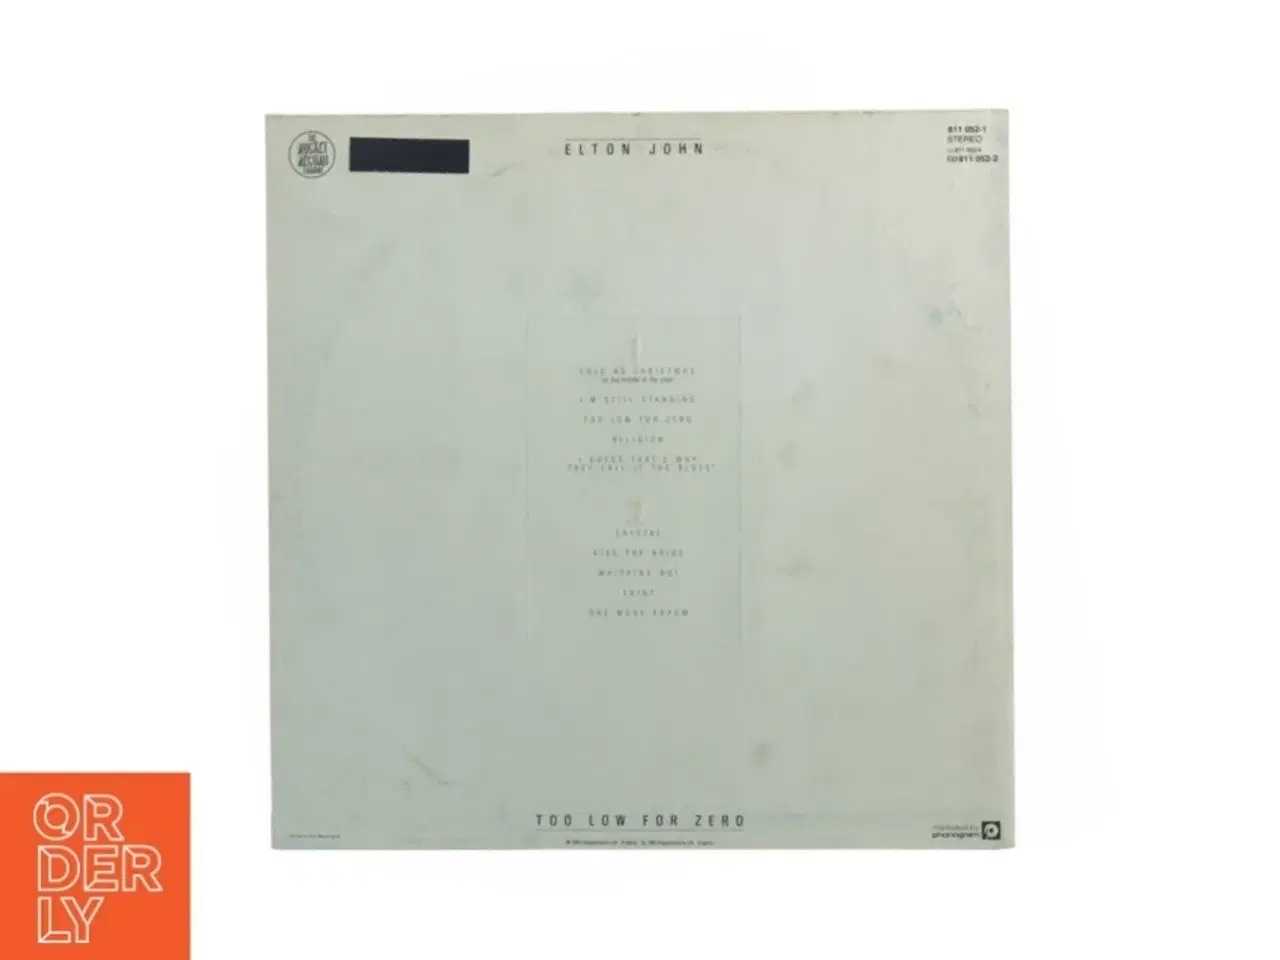 Billede 4 - Elton John - Too Low For Zero LP fra Rocket Record Company (str. 31 x 31 cm)